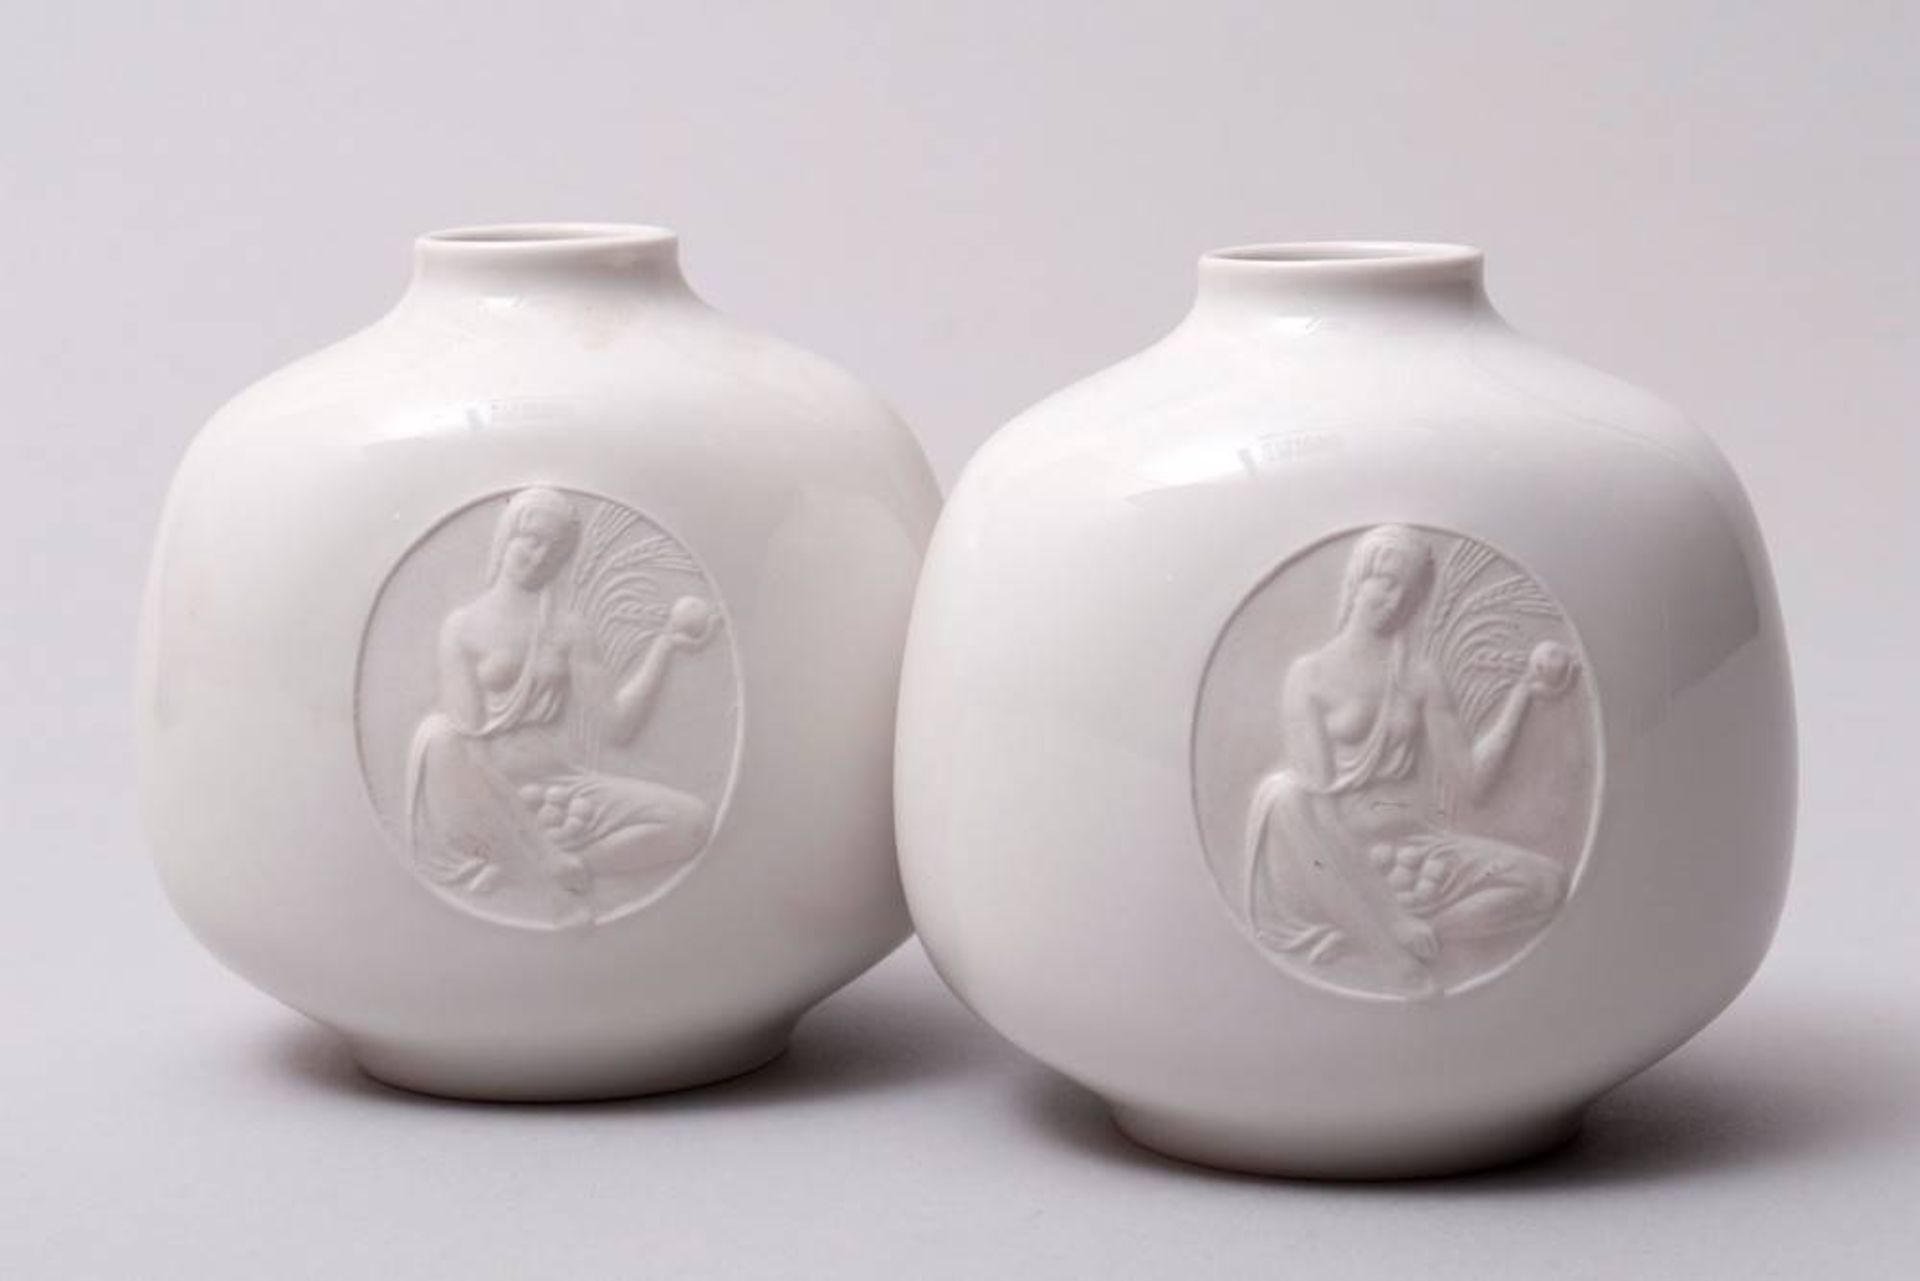 2 small vases KPM-Berlin, 20th C., design Trude Petri (shape), Siegmund Schütz (decor), model "